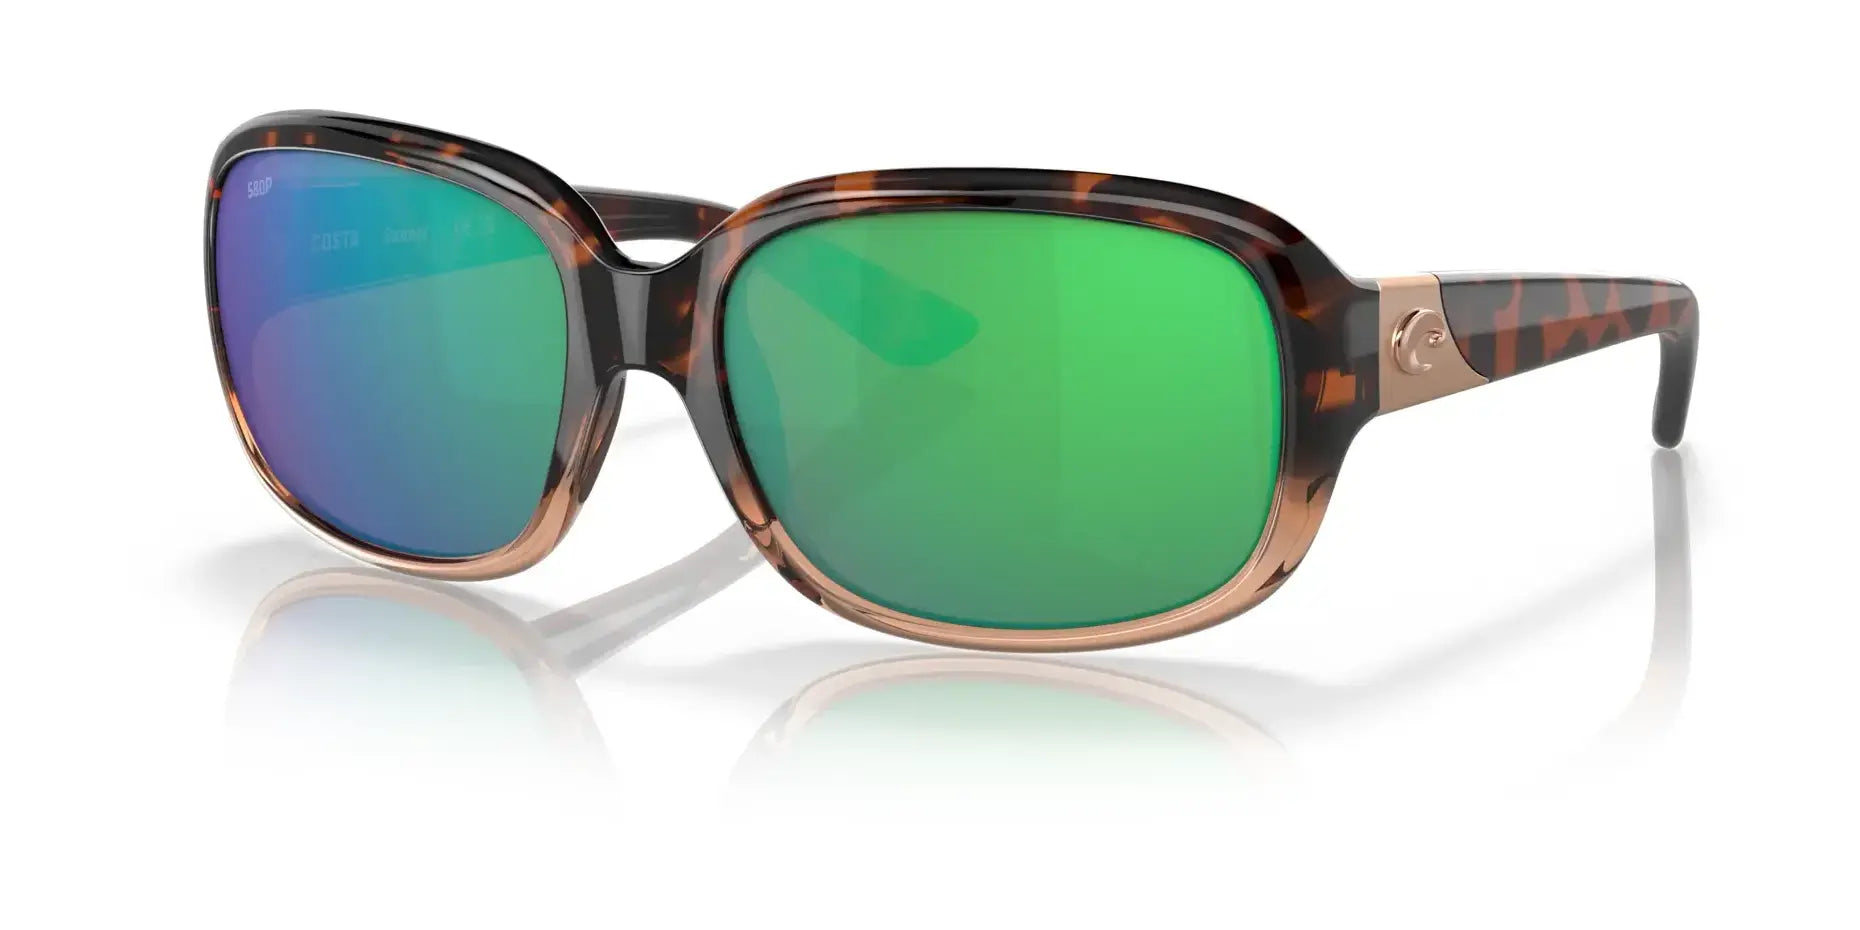 Costa GANNET 6S9041 Sunglasses Shiny Tortoise Fade / Green Mirror